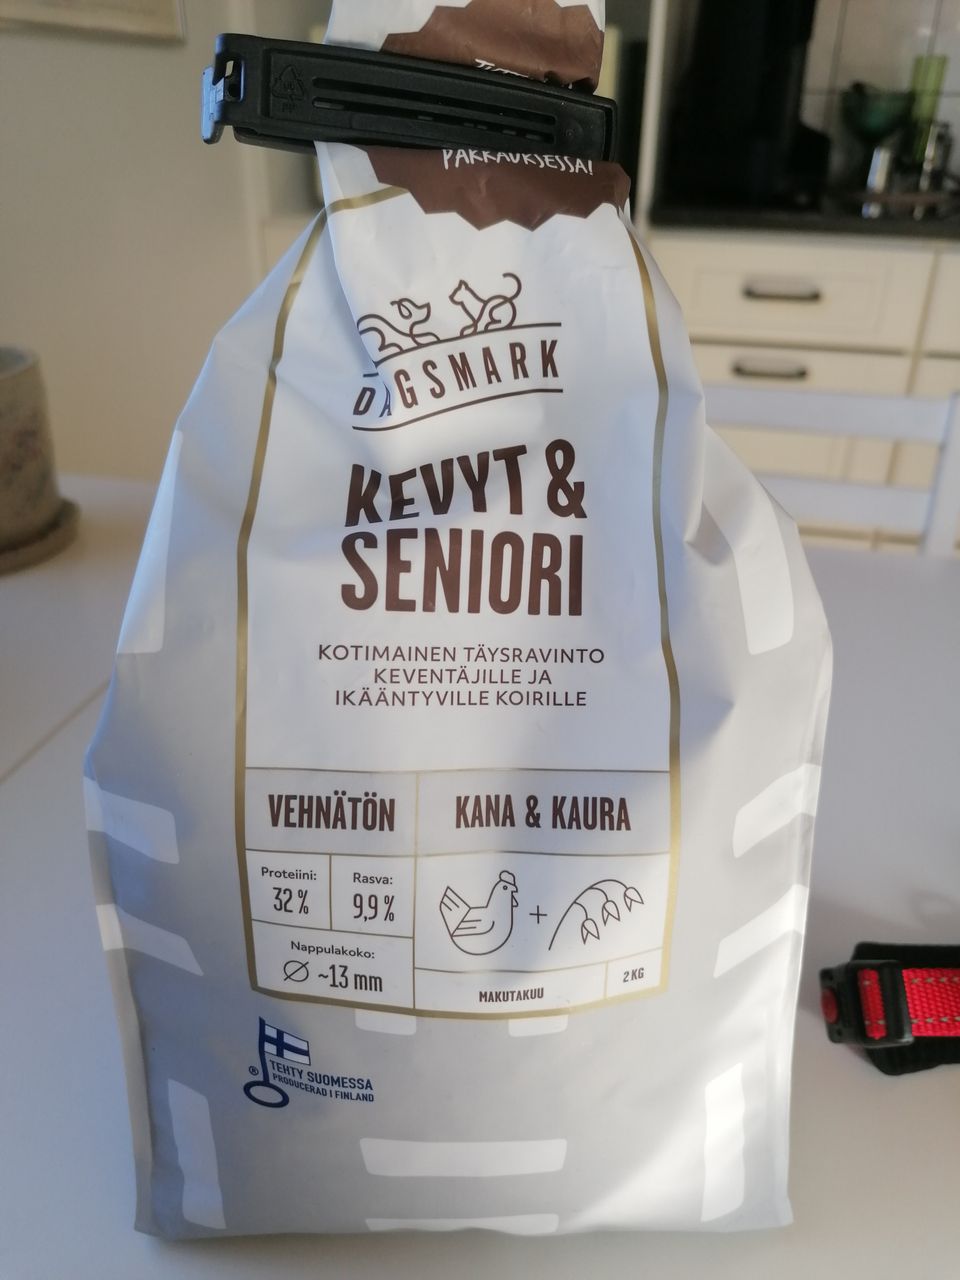 Dagsmark Kevyt&Seniori, 1,2kg jäljellä avattu pussi